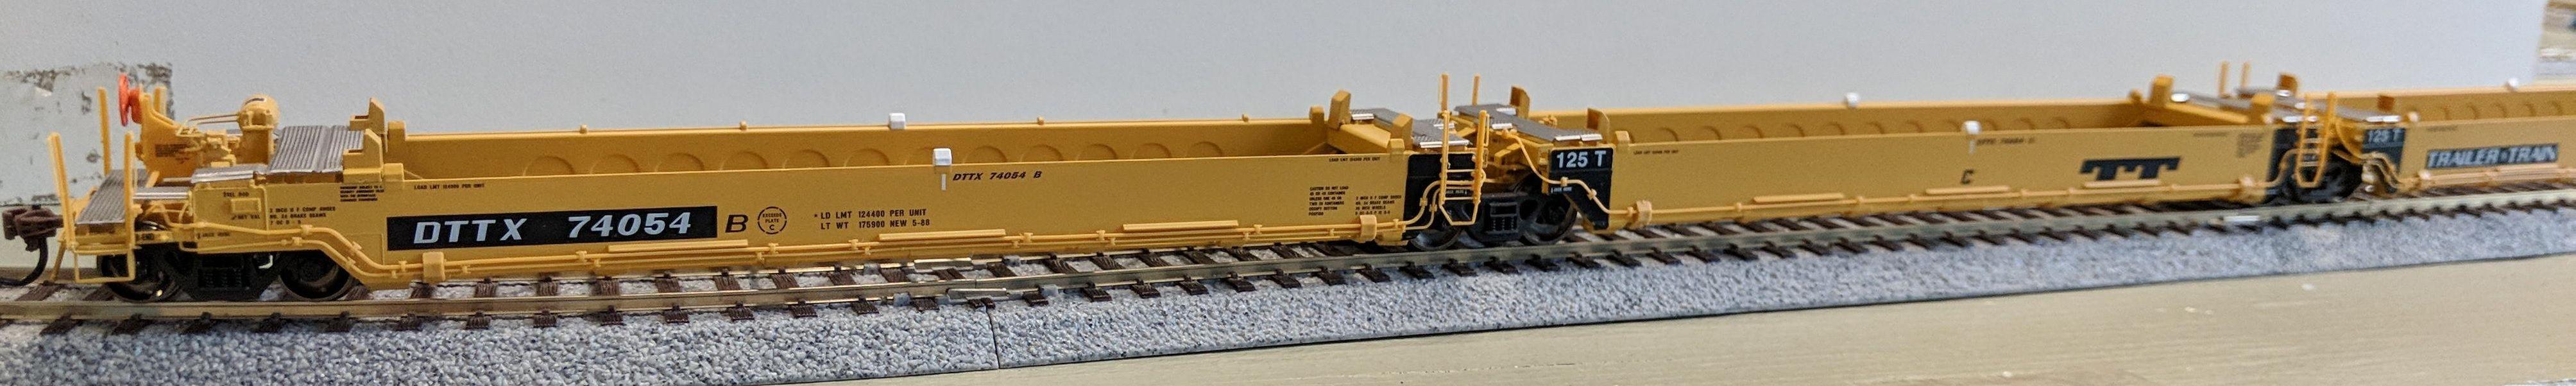 Rbox TTX Logo - Otter Valley Railroad Model Trains, Ontario Canada - HO